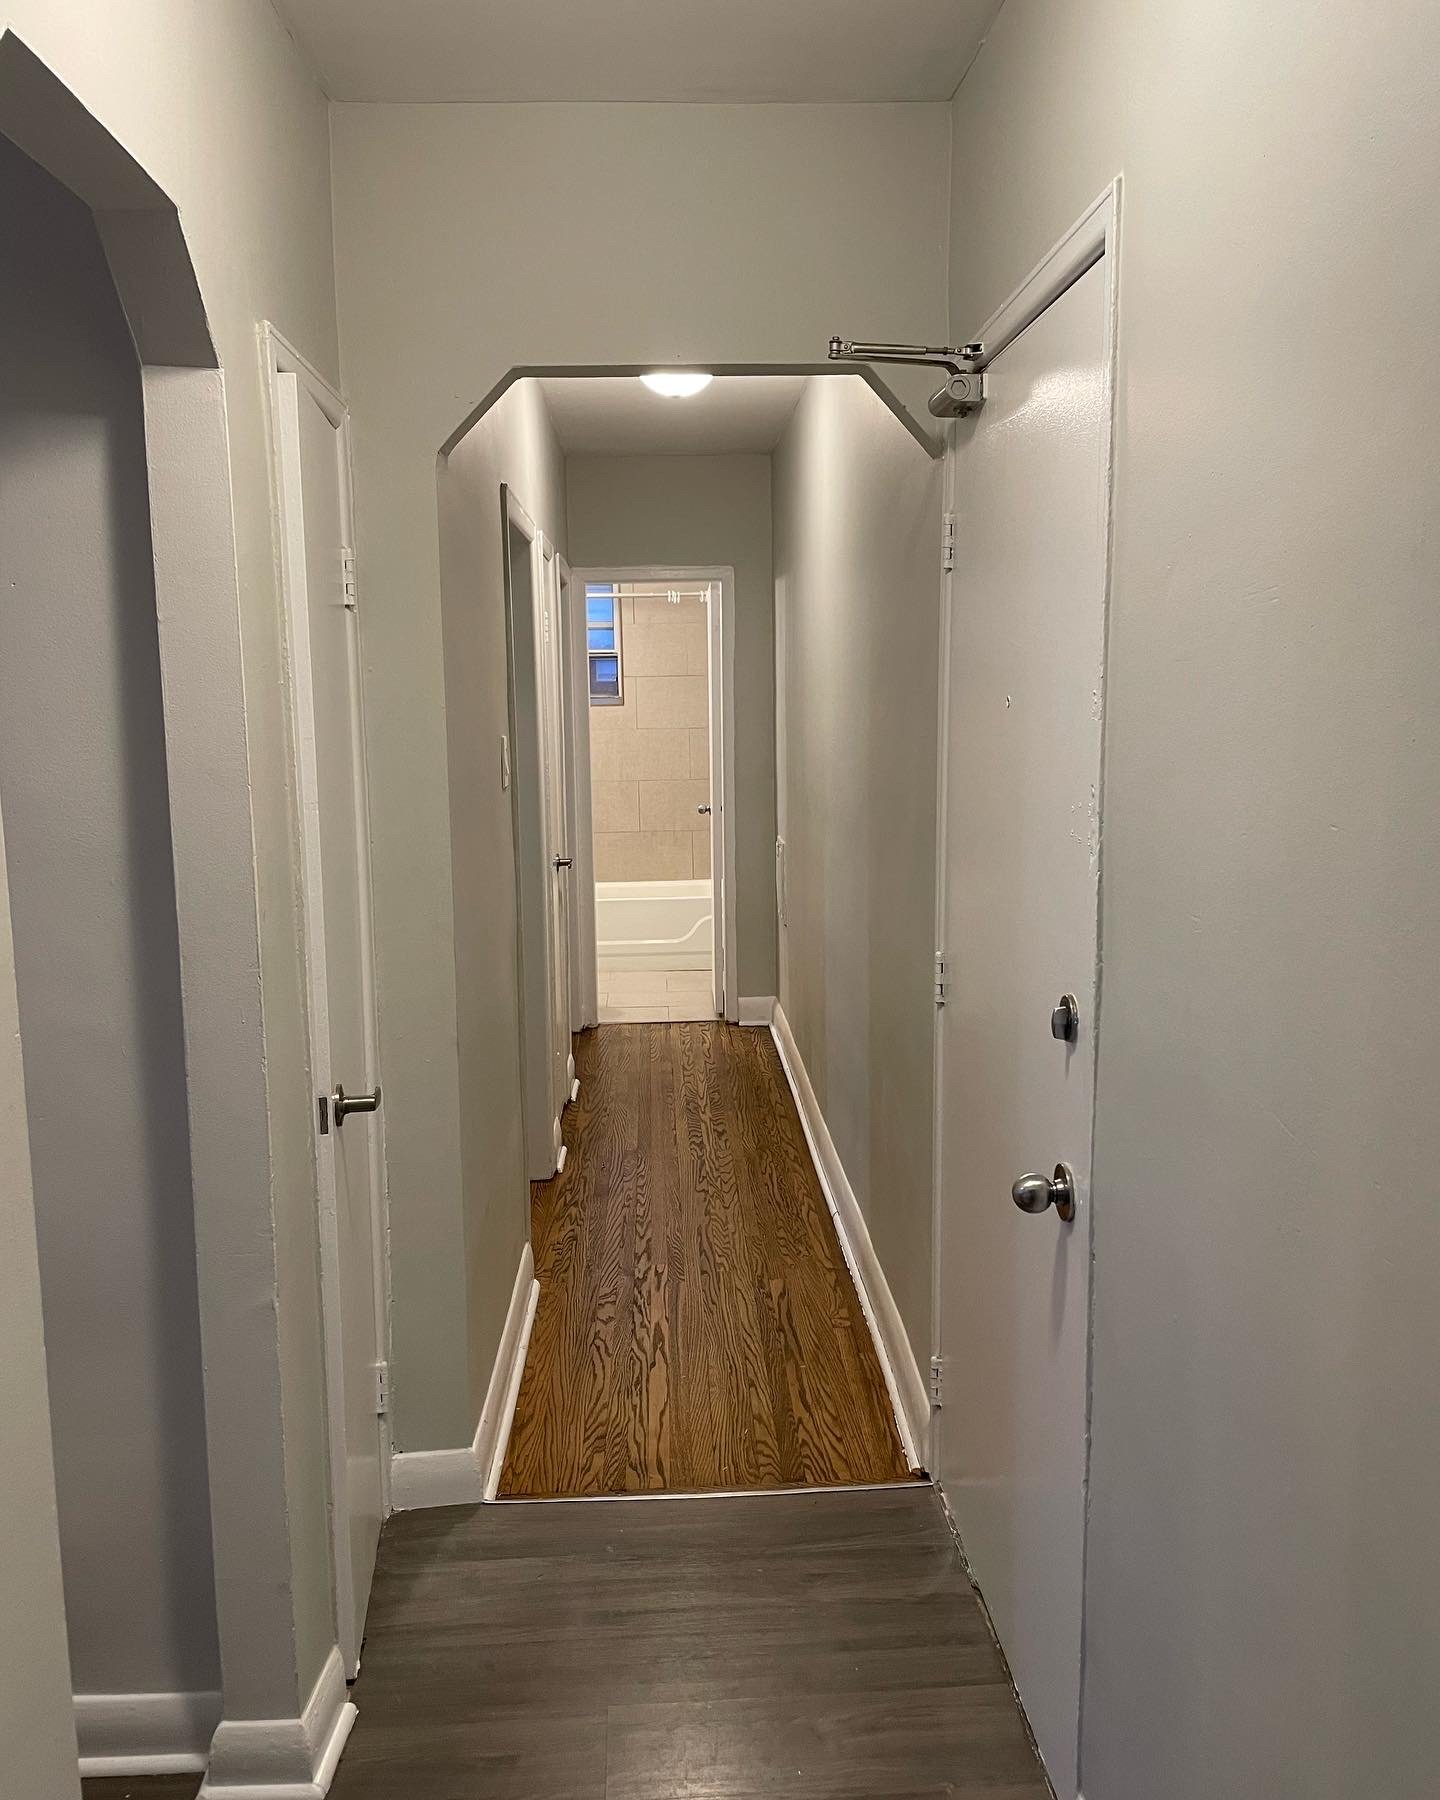  Hallway, after renovations 